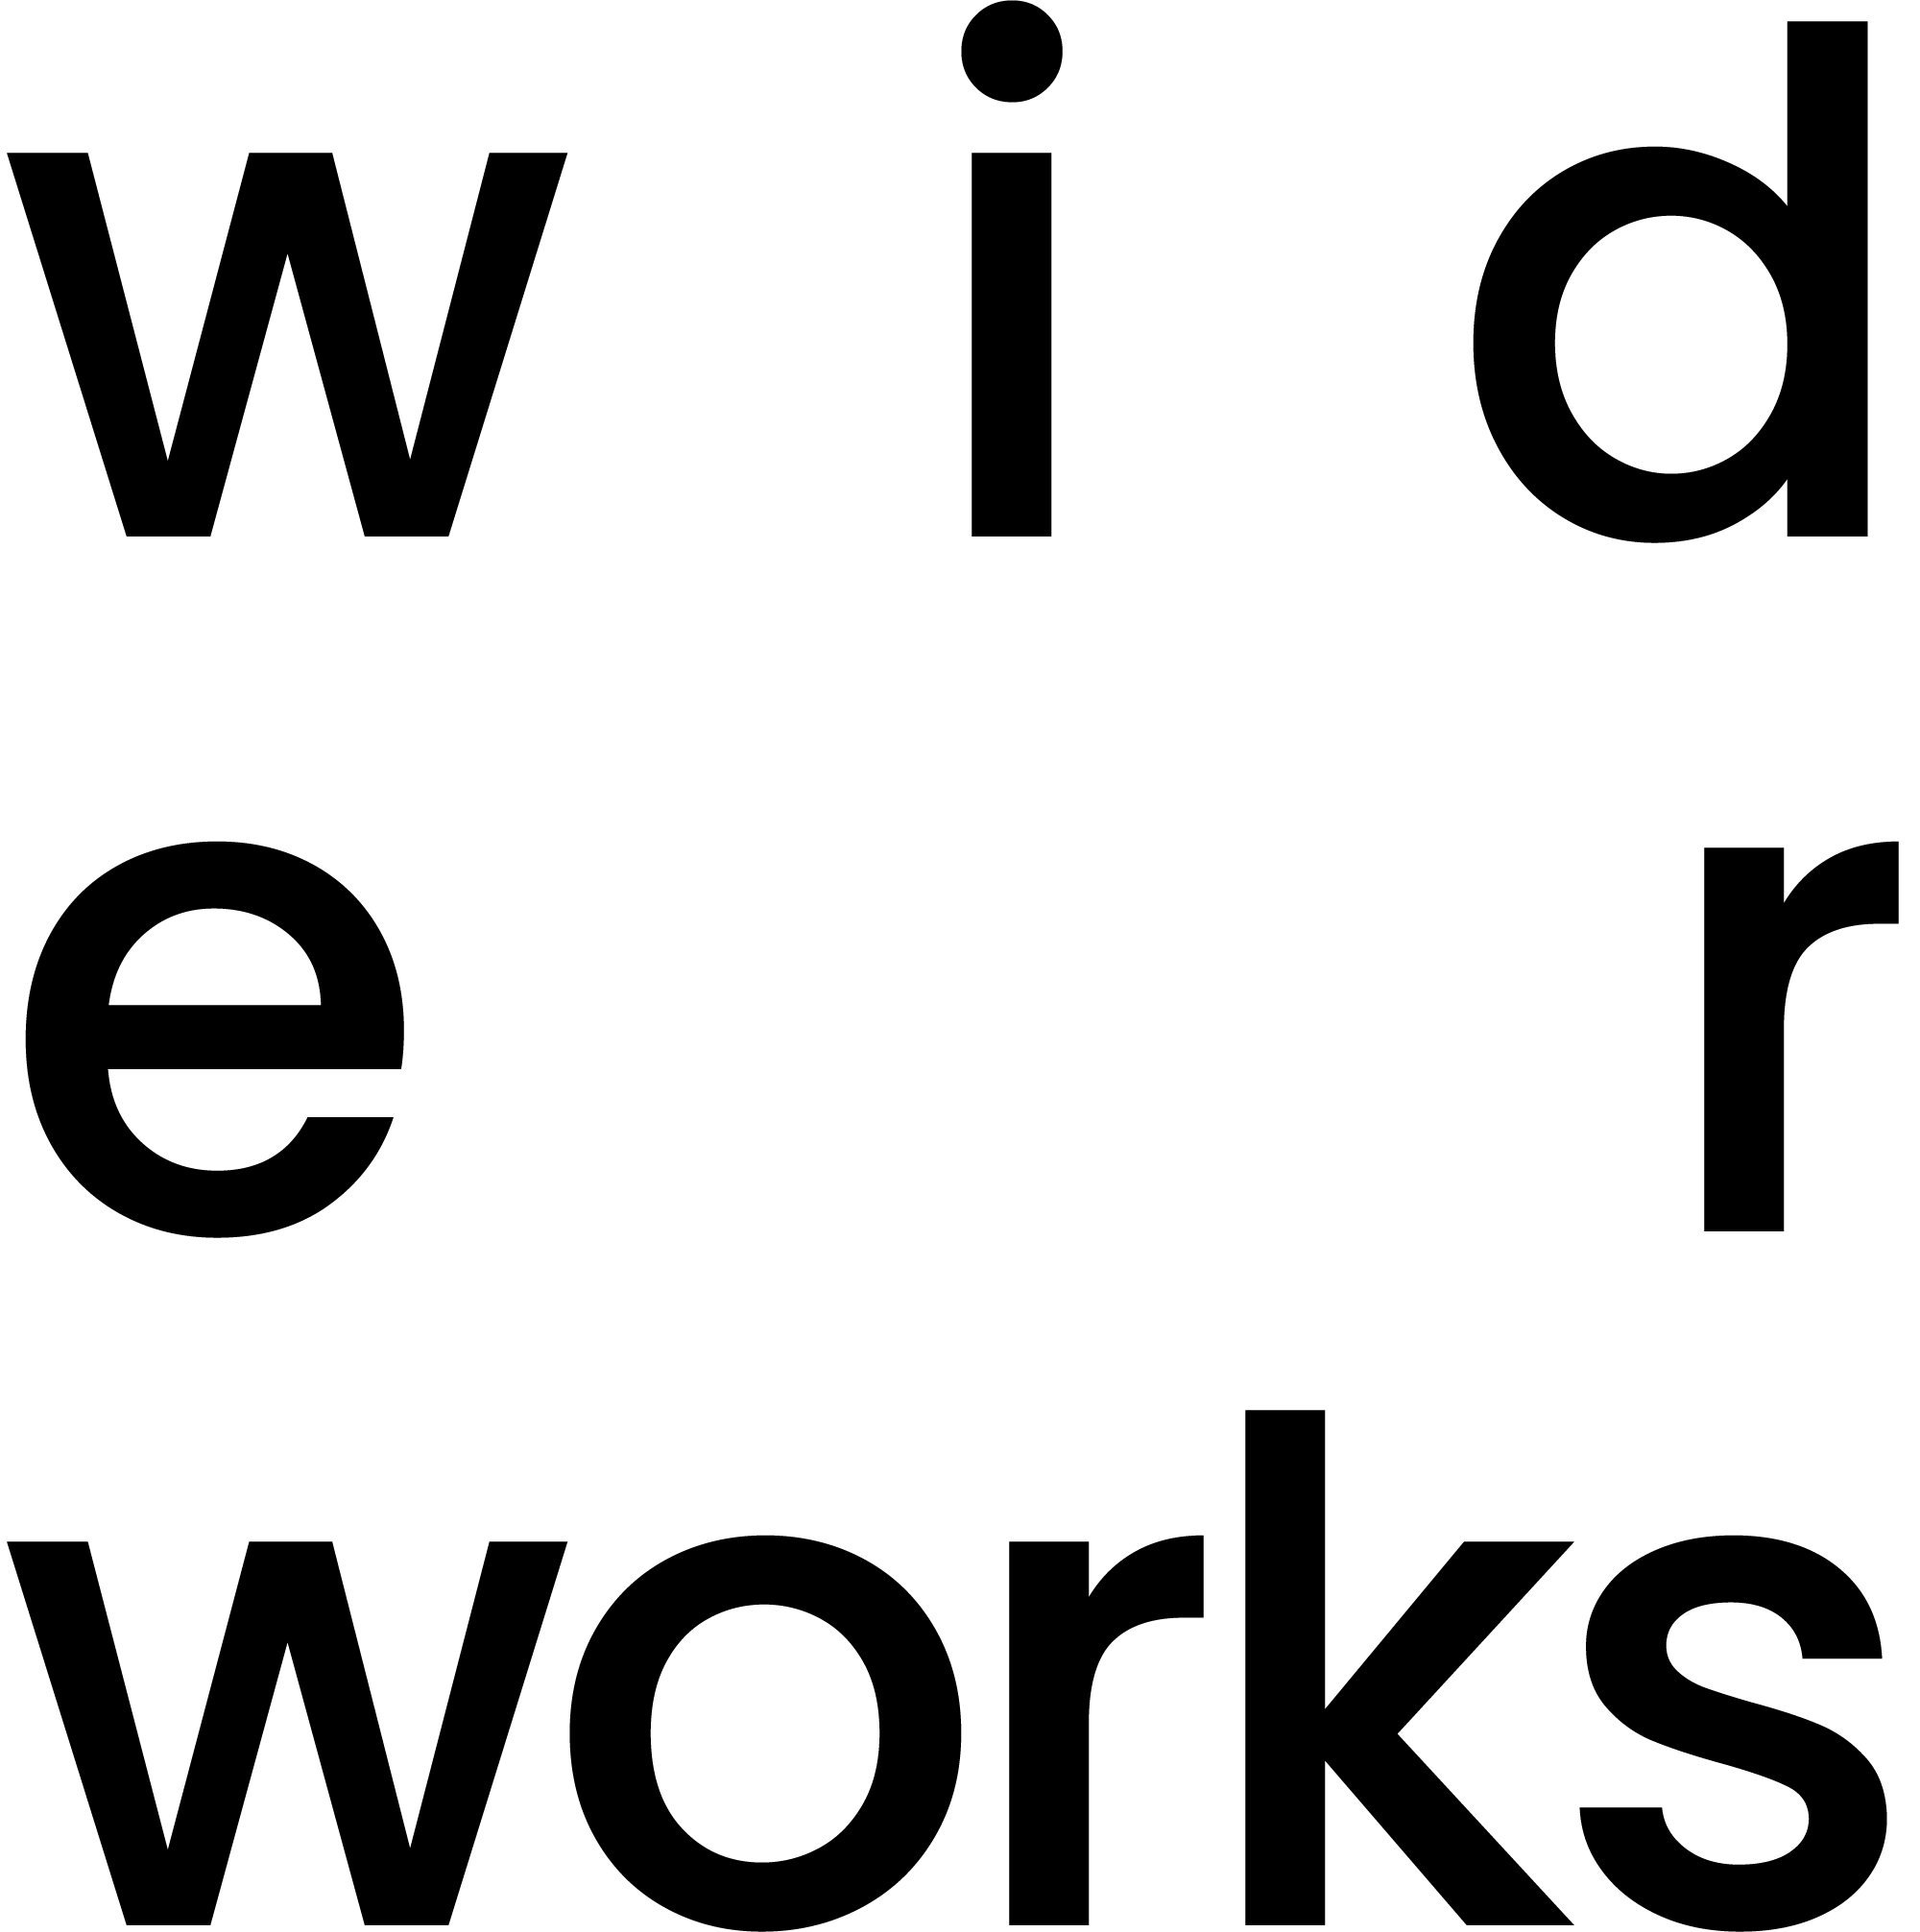 widerworks Label Logo